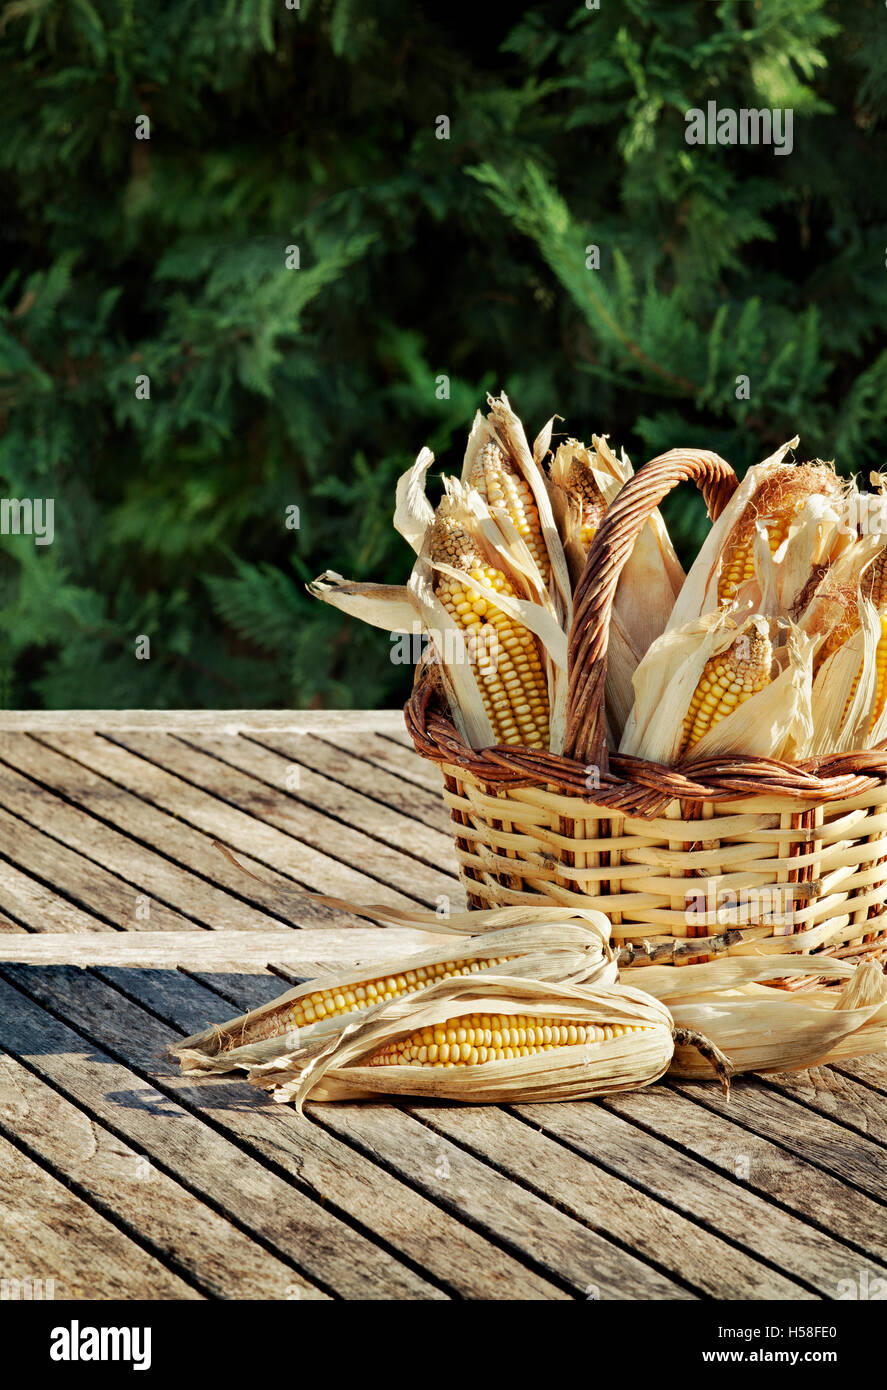 Corn cobs in basket at garden. Stock Photo